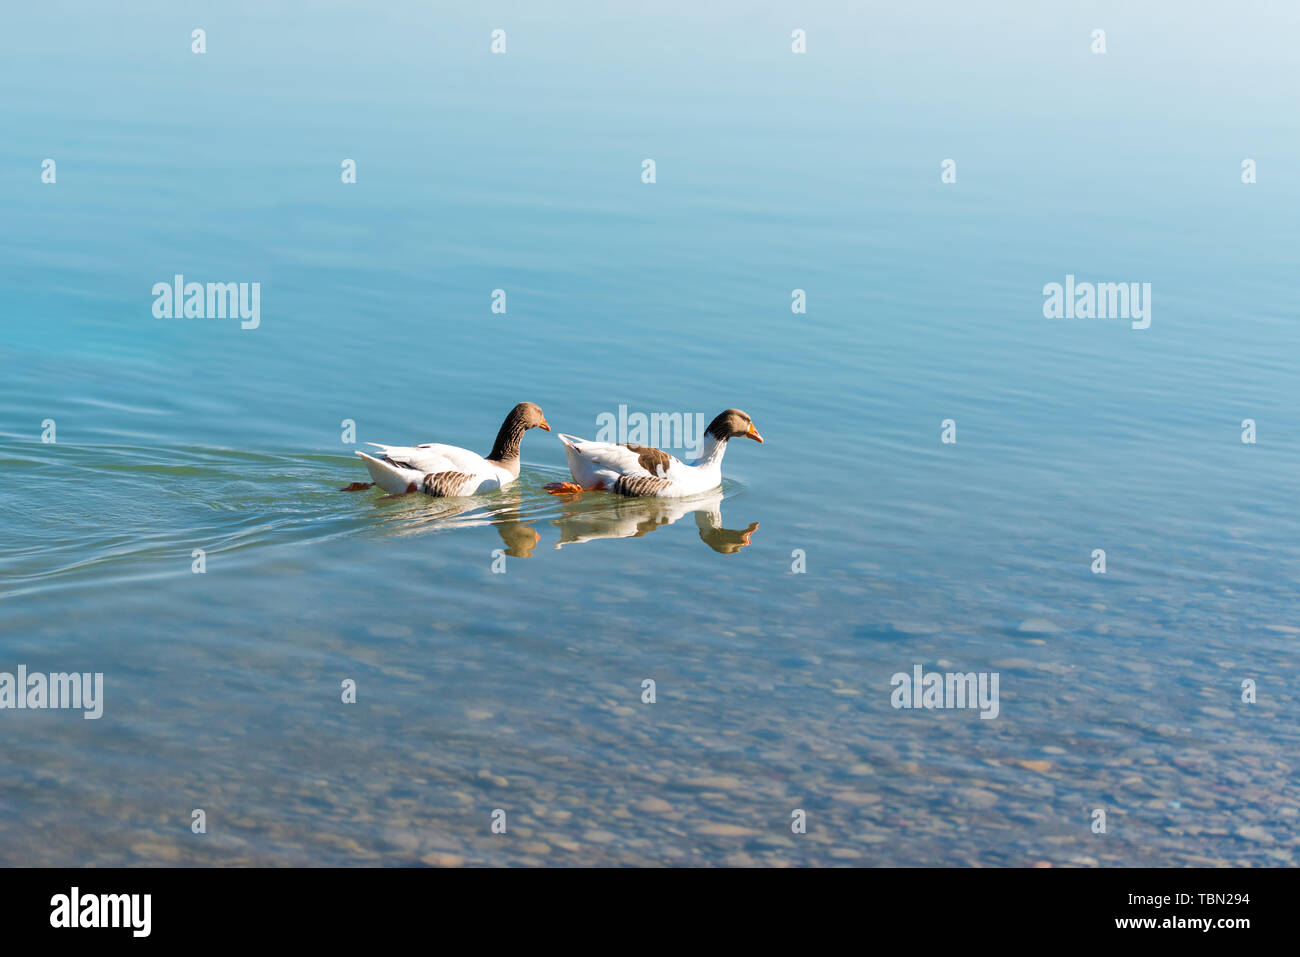 Goose nuoto in acque blu con onde. Duck nuoto in acque blu. Foto Stock